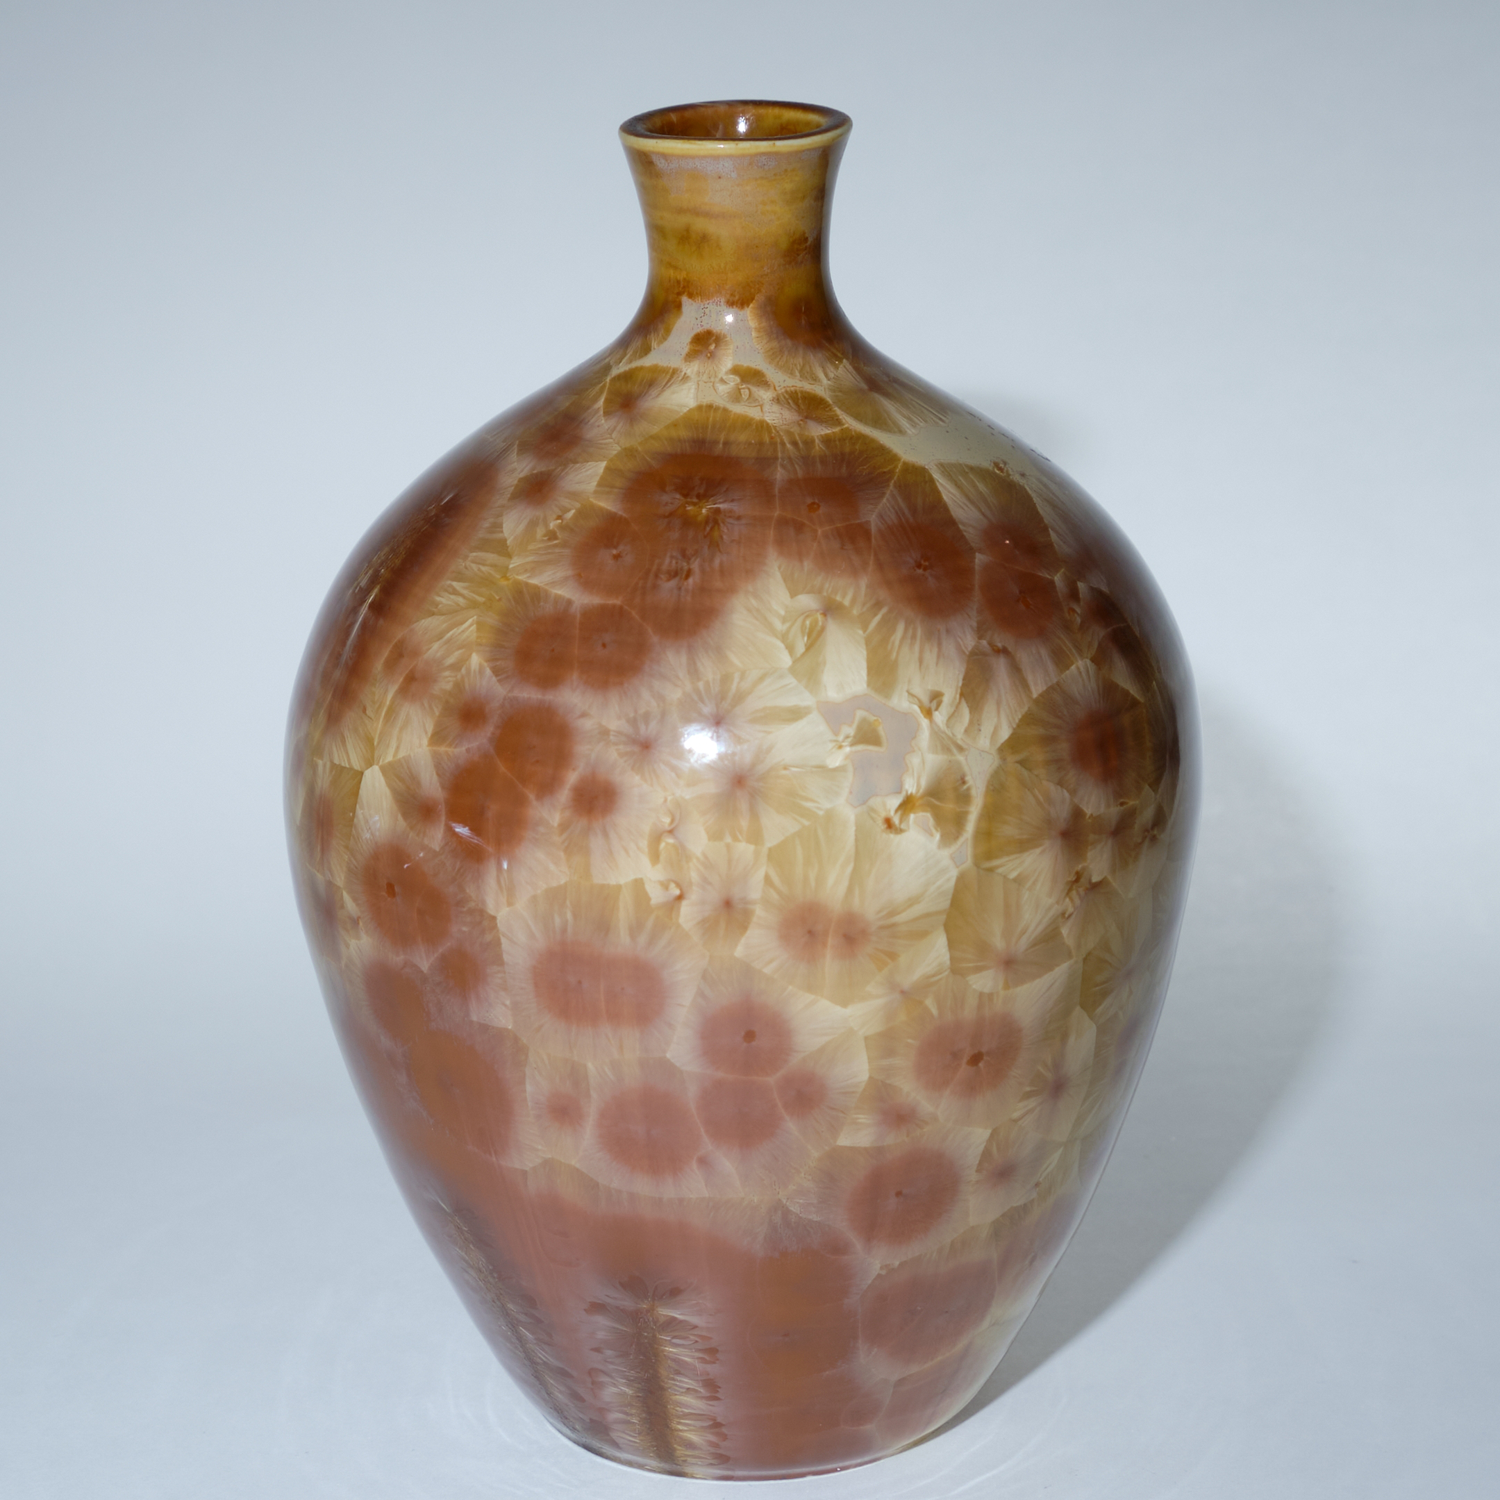 Yumiko Katsuya: Vase – Brown Product Image 1 of 1